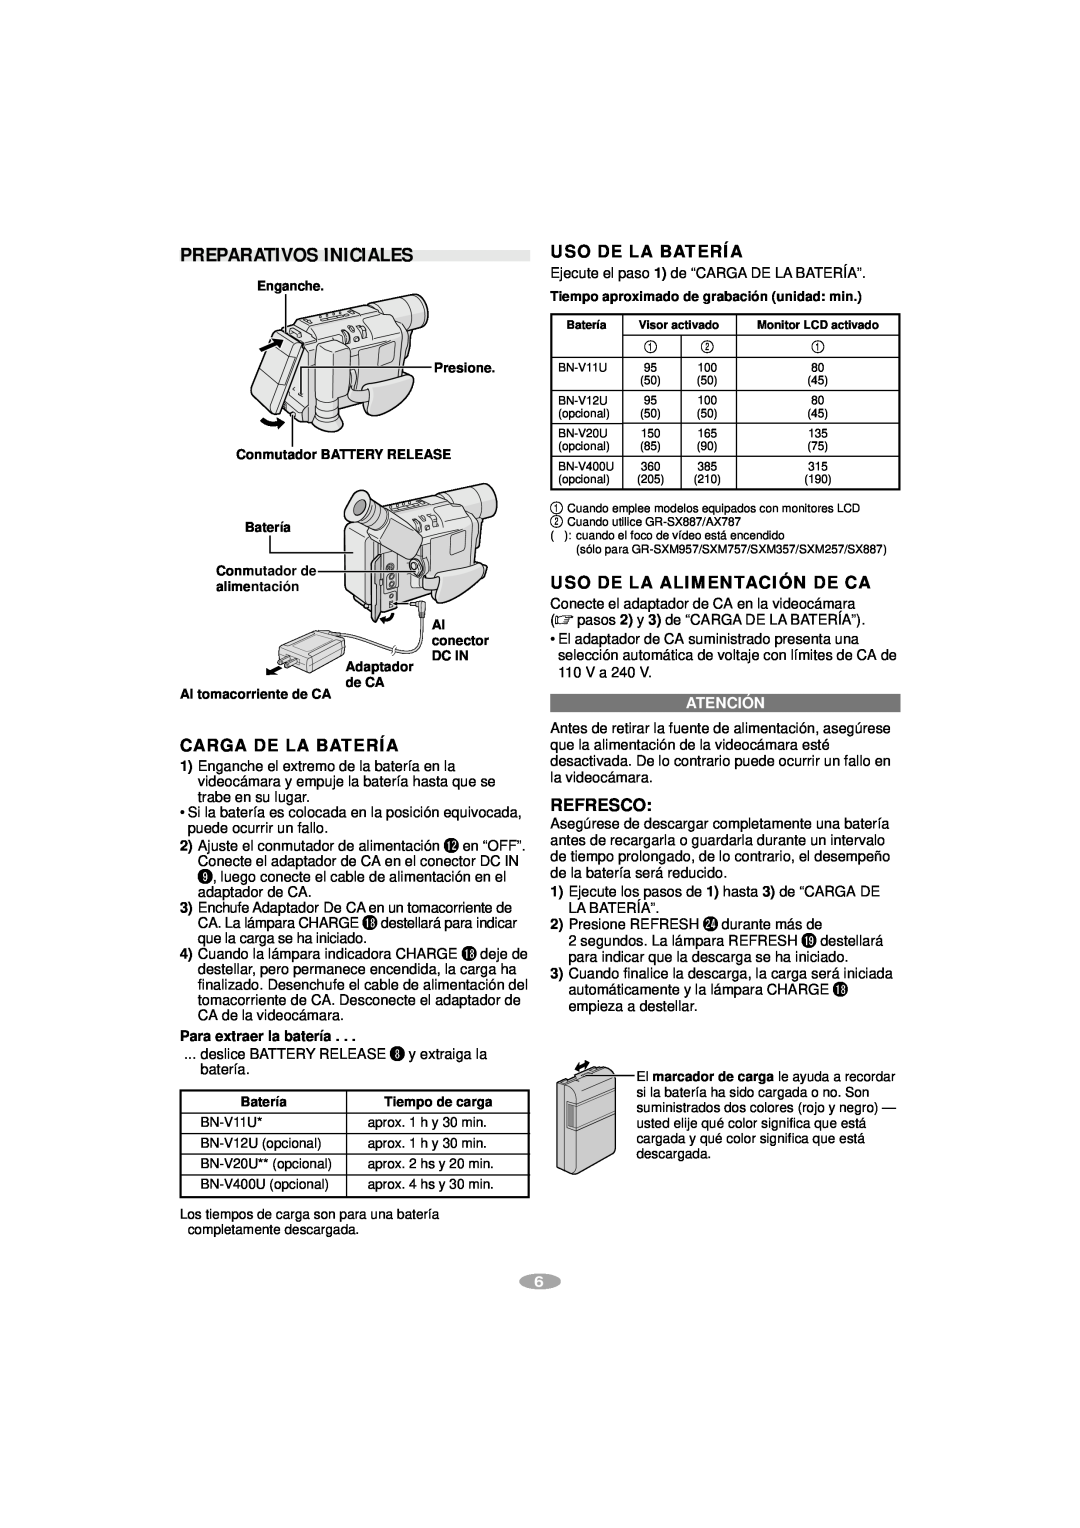 JVC GR-AX787 manual Preparativos Iniciales, Carga De La Batería, Uso De La Batería, Uso De La Alimentación De Ca, Refresco 